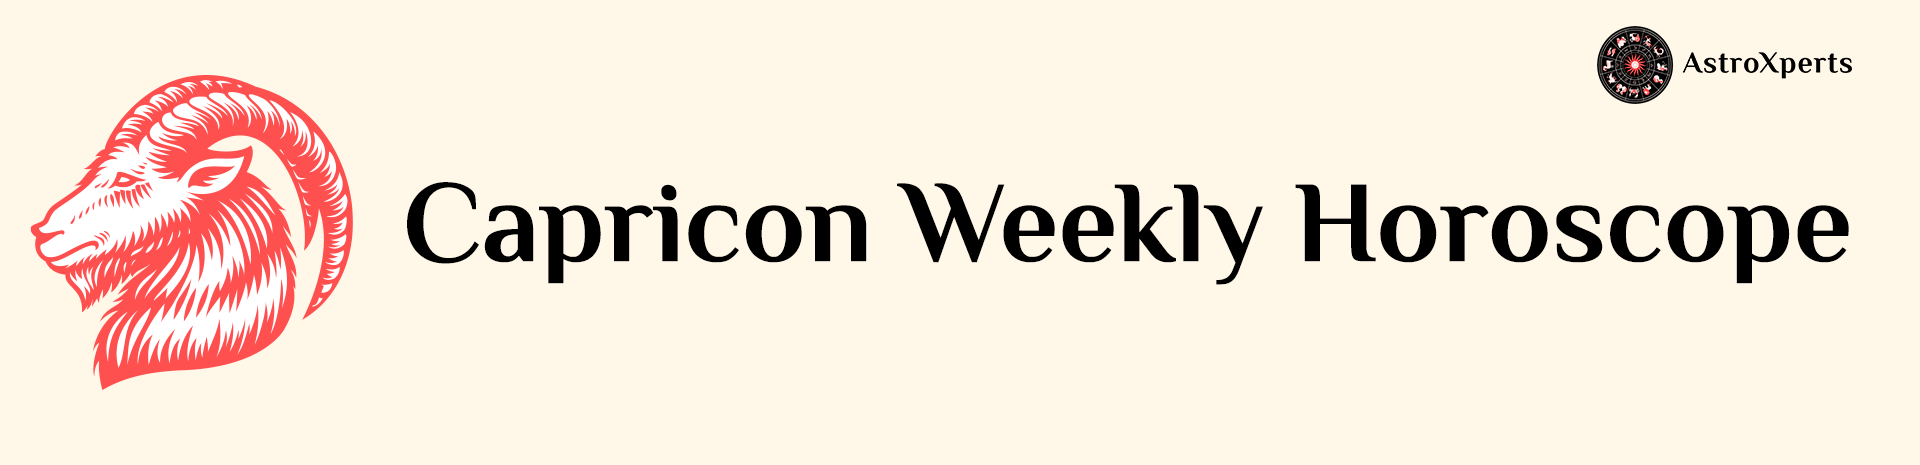 Capricorn weekly